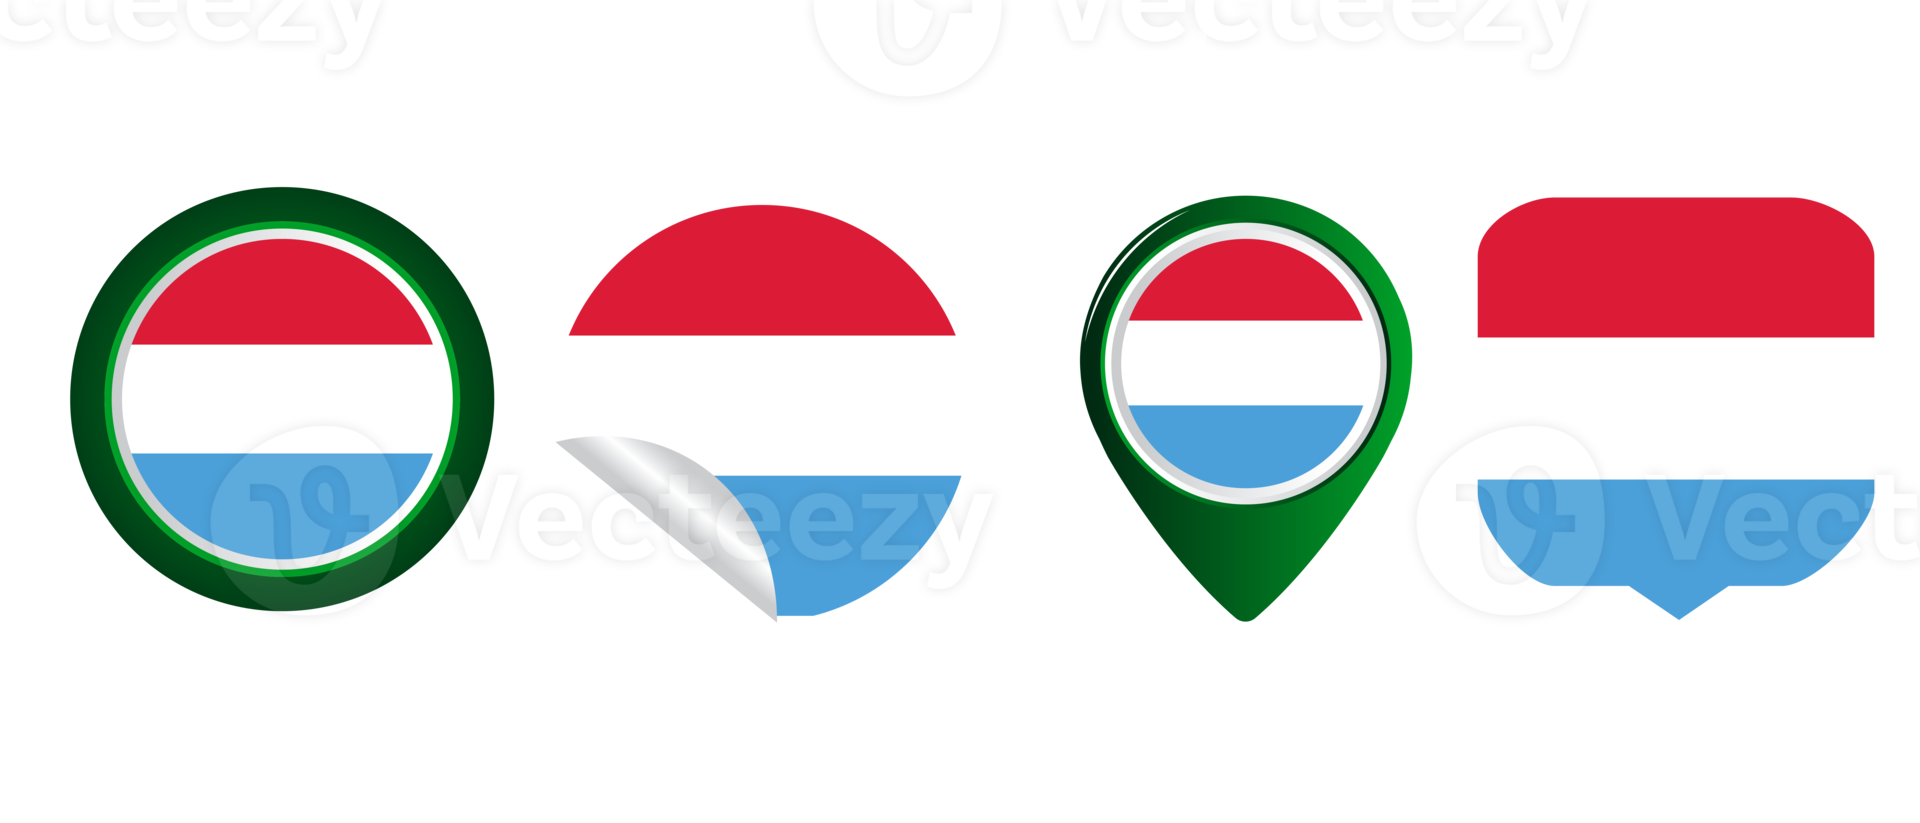 luxemburg flag flache symbol symbol illustration png